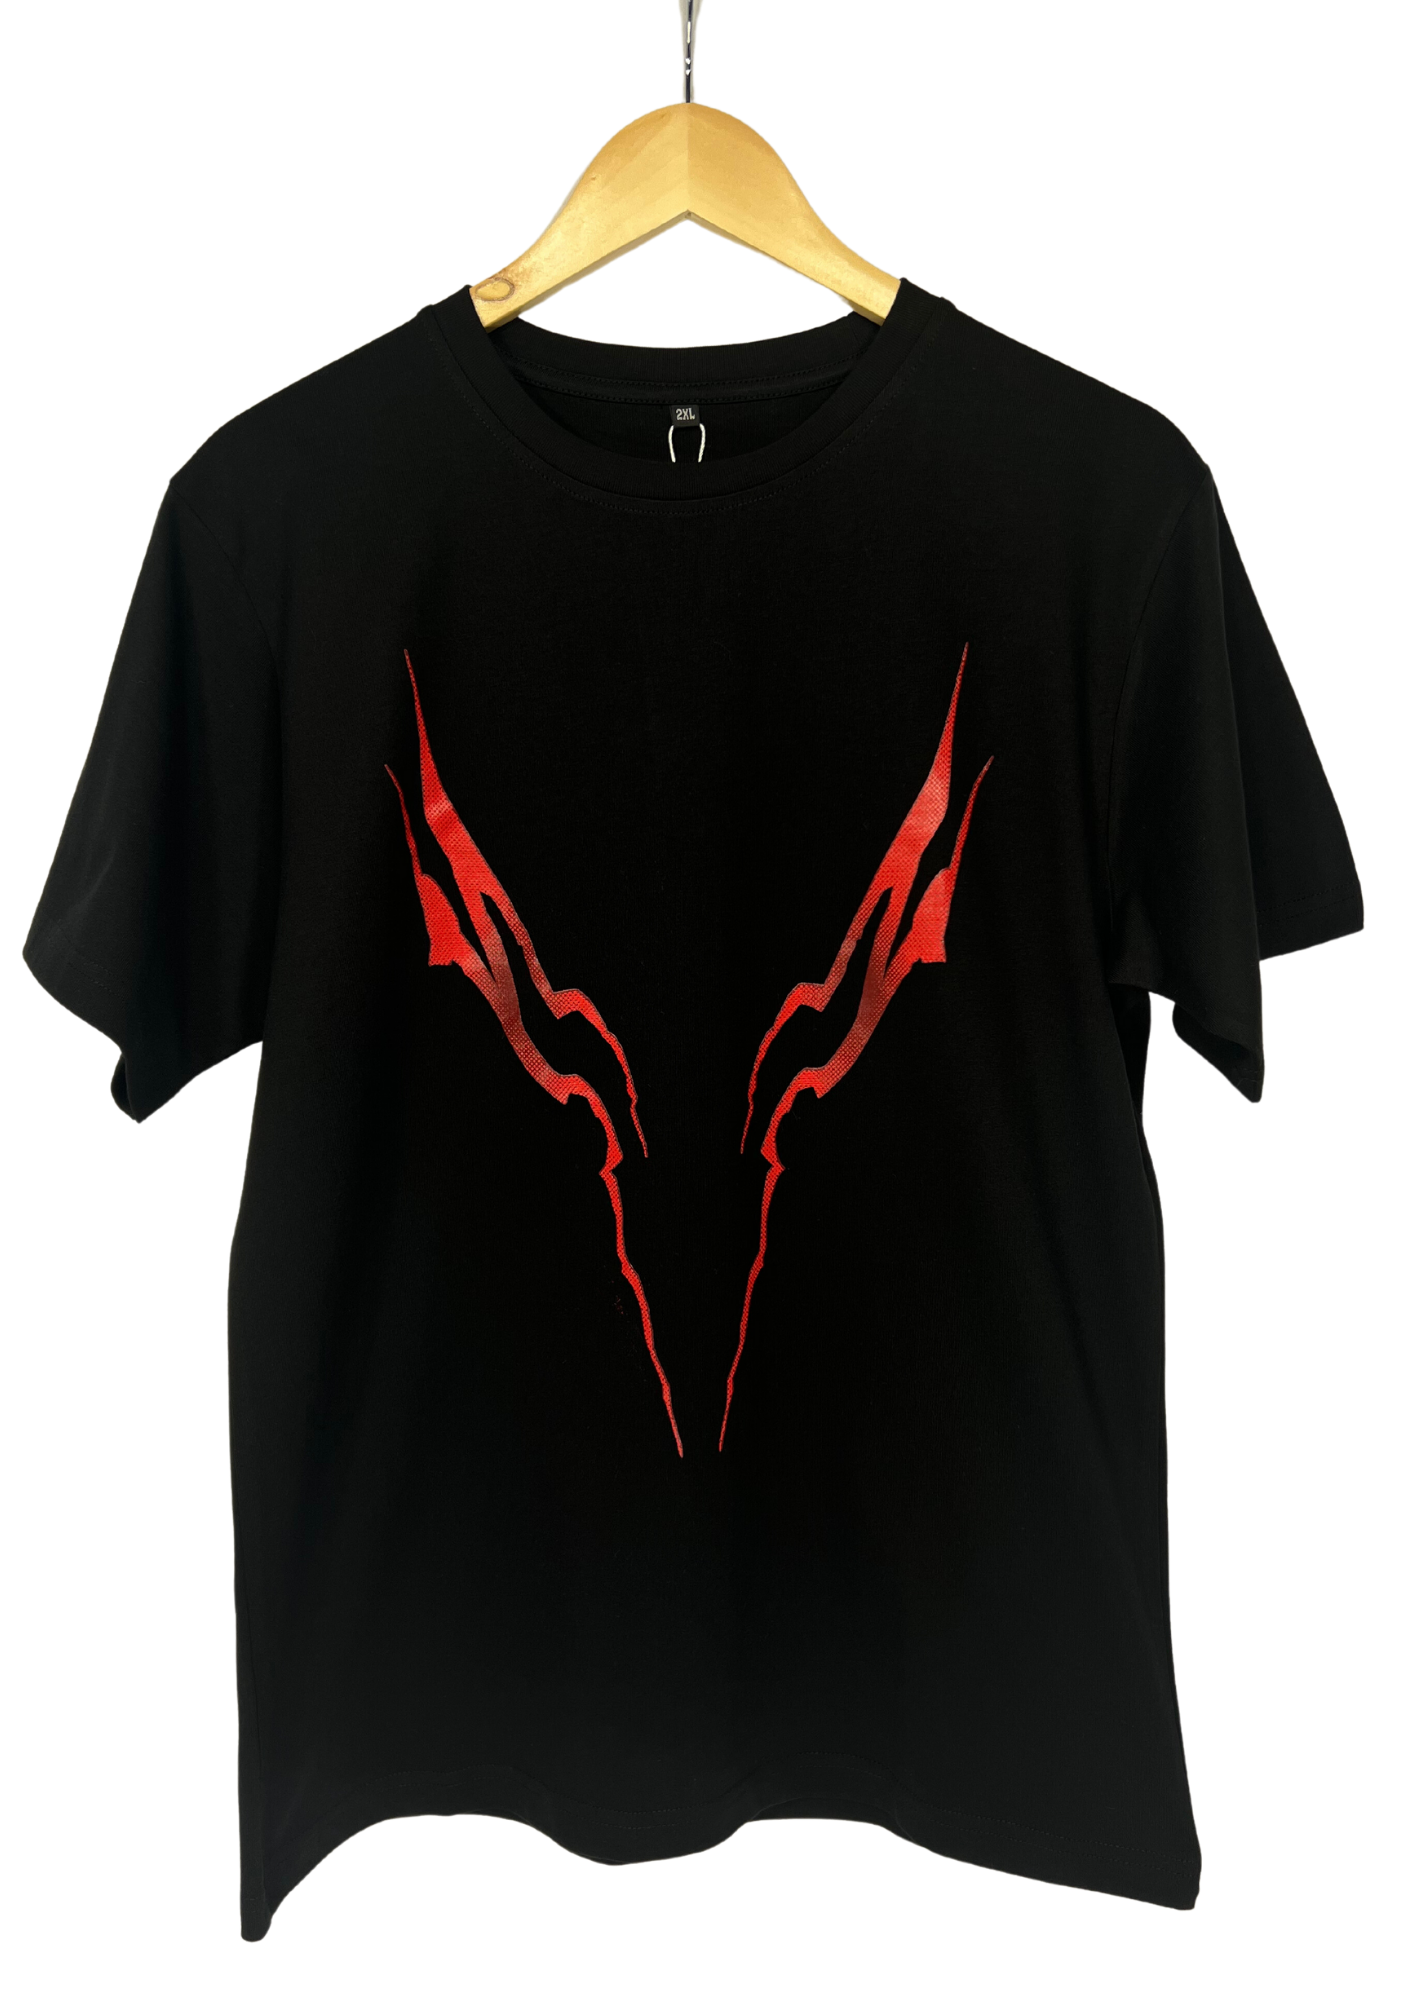 Berserk x Prime 1 Studio Eyes of Insane Warrior T-shirt